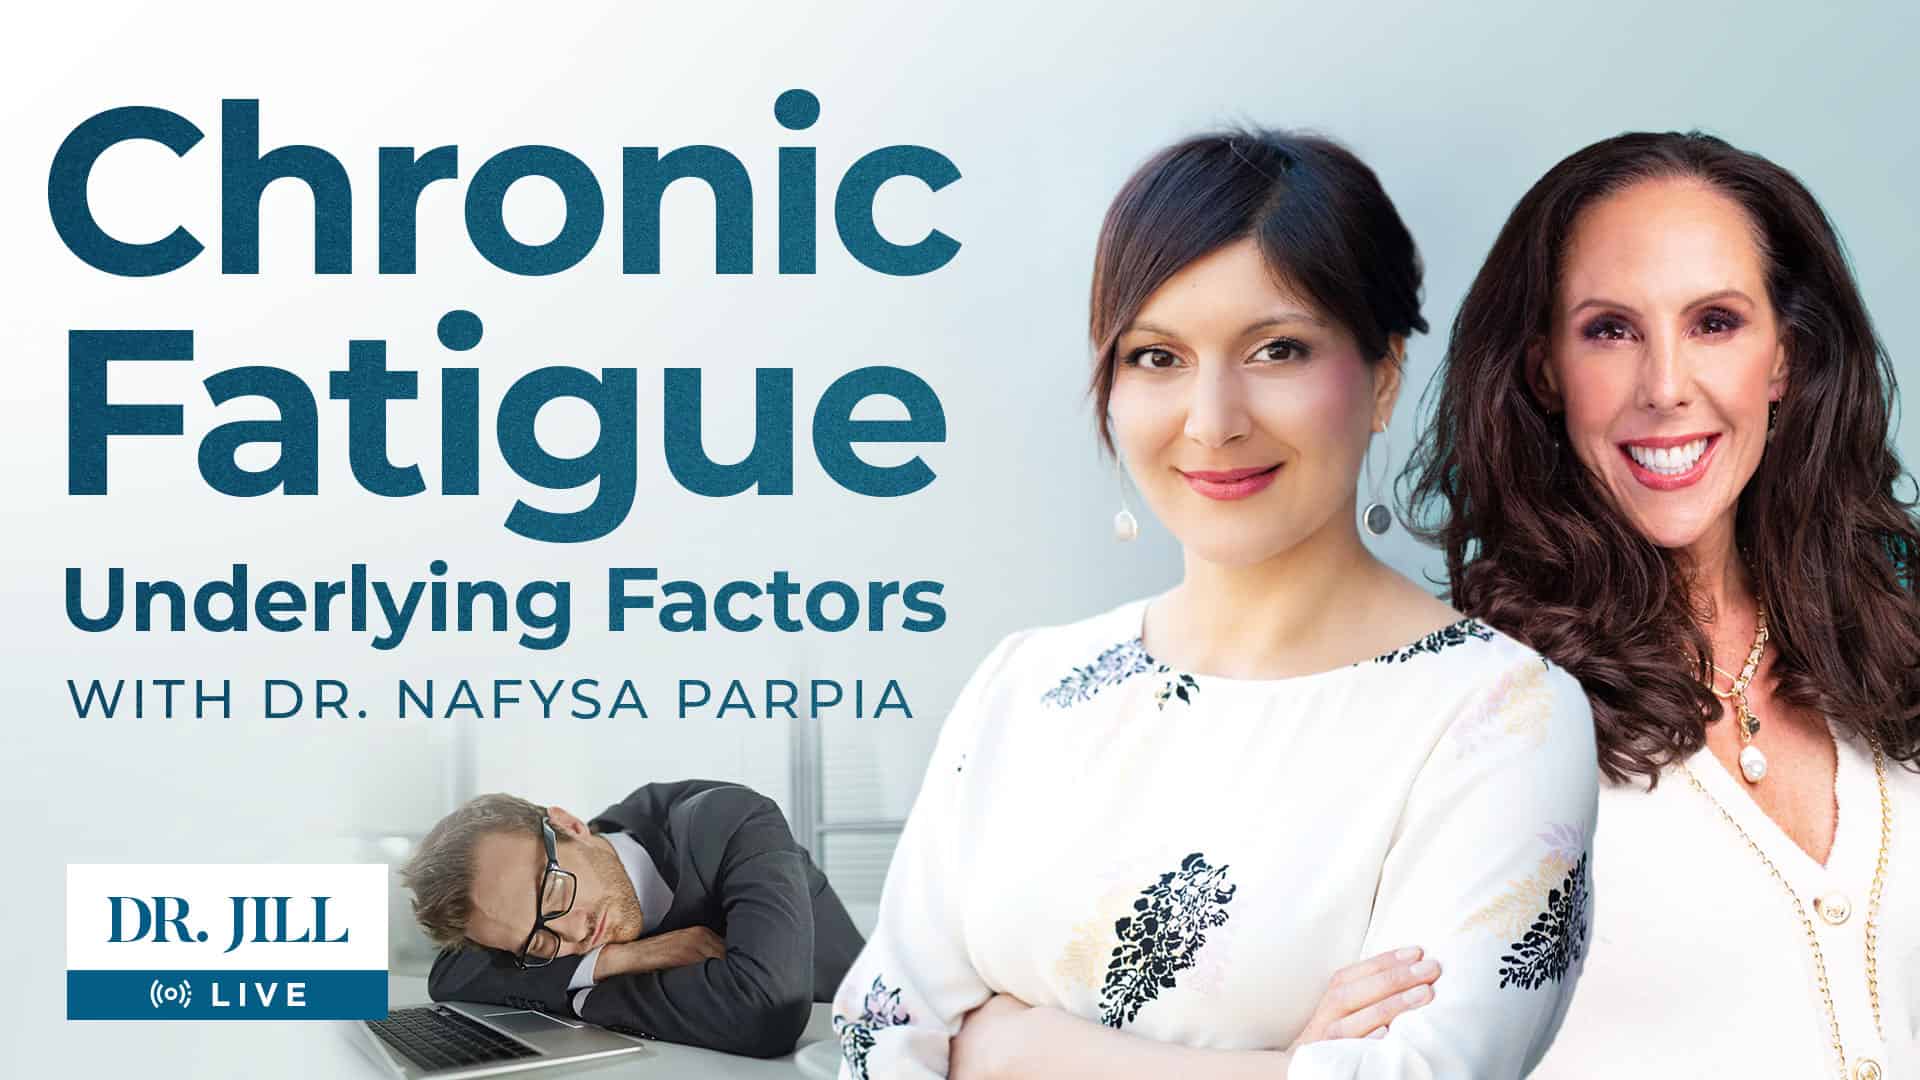 52: Dr. Jill Interviews Dr. Nafysa Parpia on Chronic Fatigue Underlying Factors